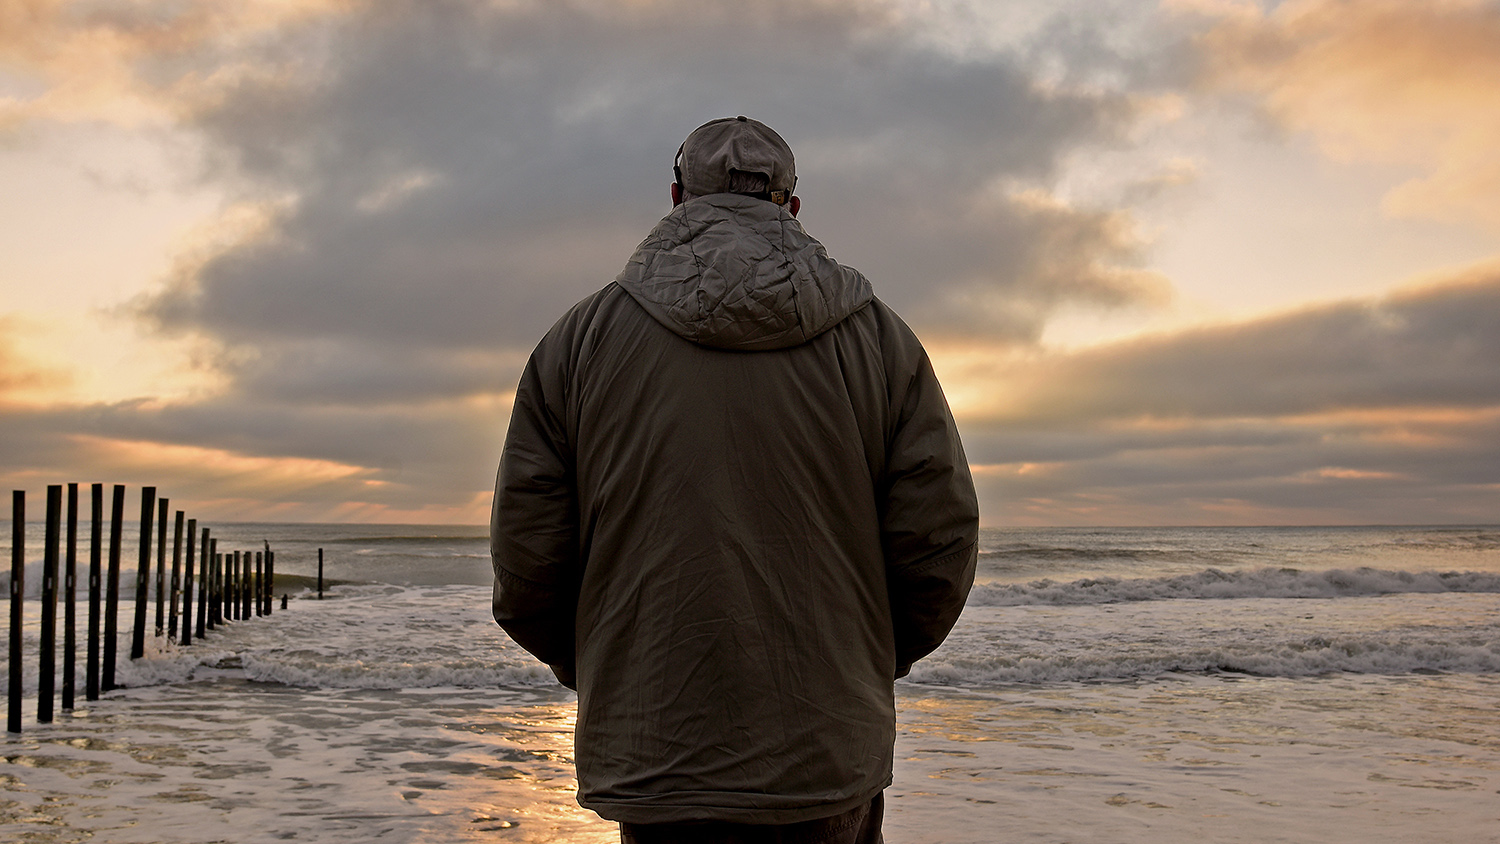 A man stands on a beach, overlooking the ocean